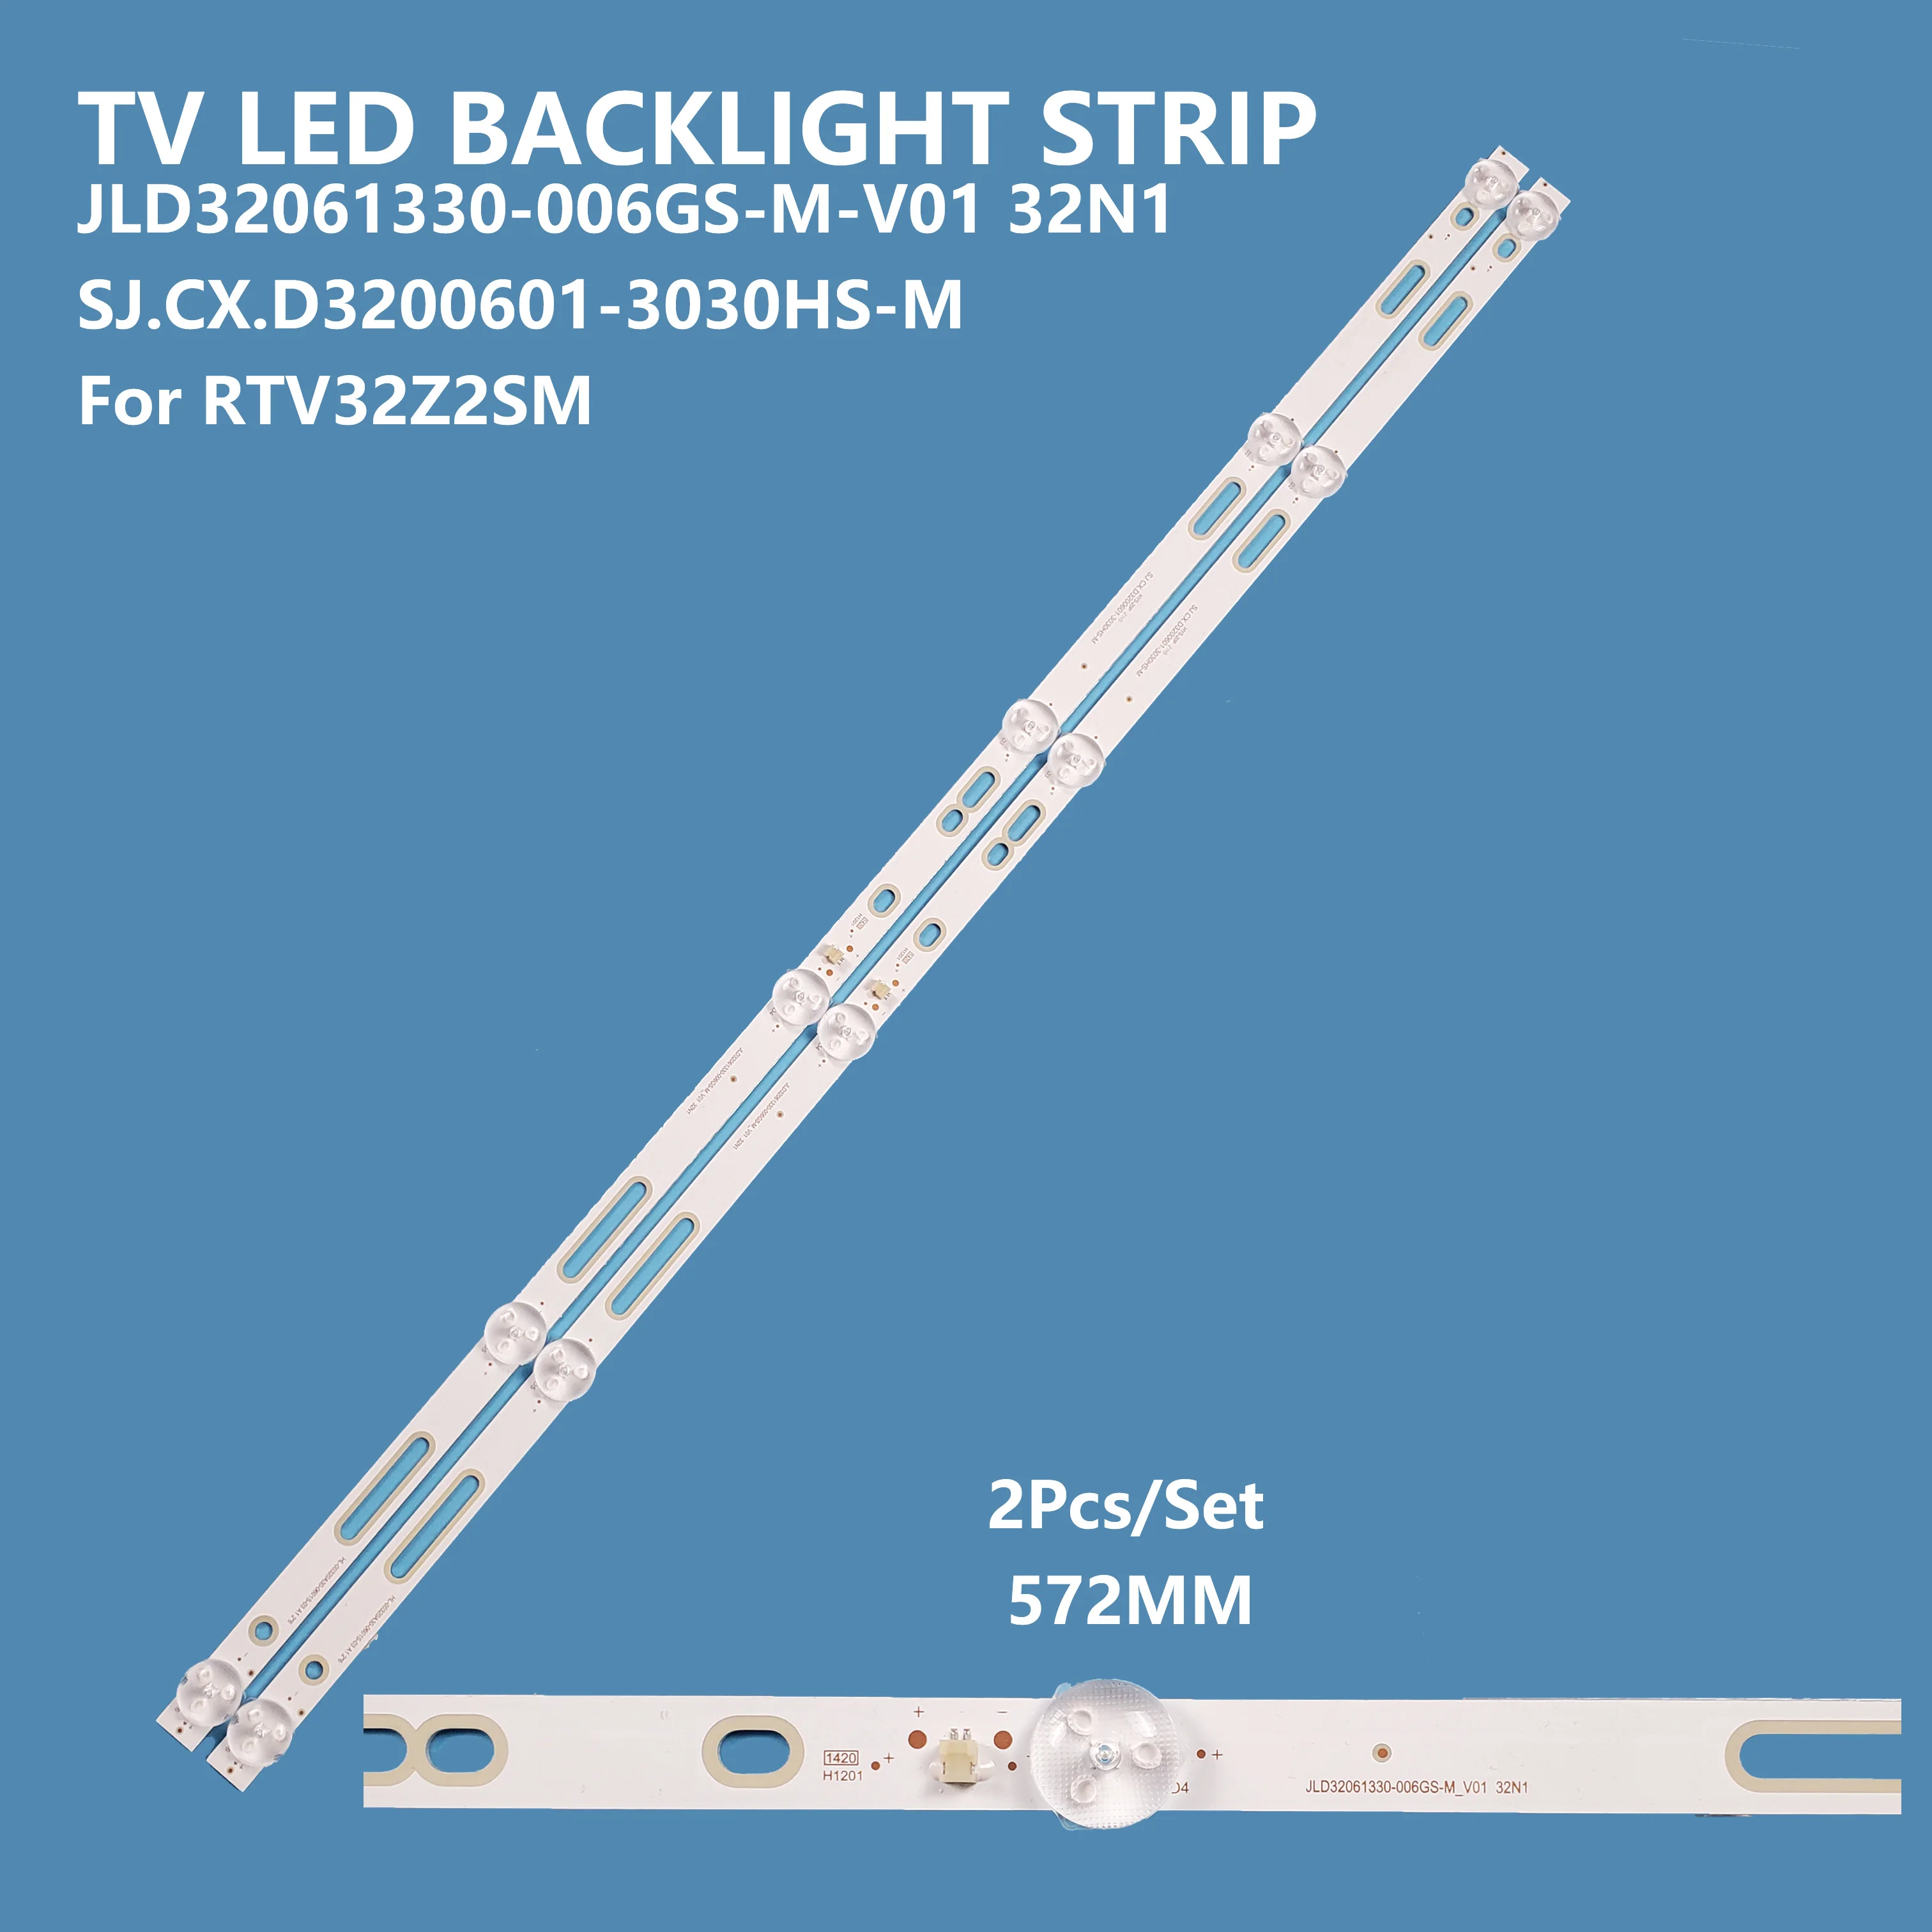 2Pcs/set LED Backlight Bar Light Strip JL.D32061330-006GS-M-V01 32N1 HL-00320A30-0601S-03 A1 for 32inch TV Accessories Repair 2pcs set smart tv led backlight bar strip hs 018 d3200601 3030as 210916 2 01 0220008 6leds for 32inch tv lcd accessories repair